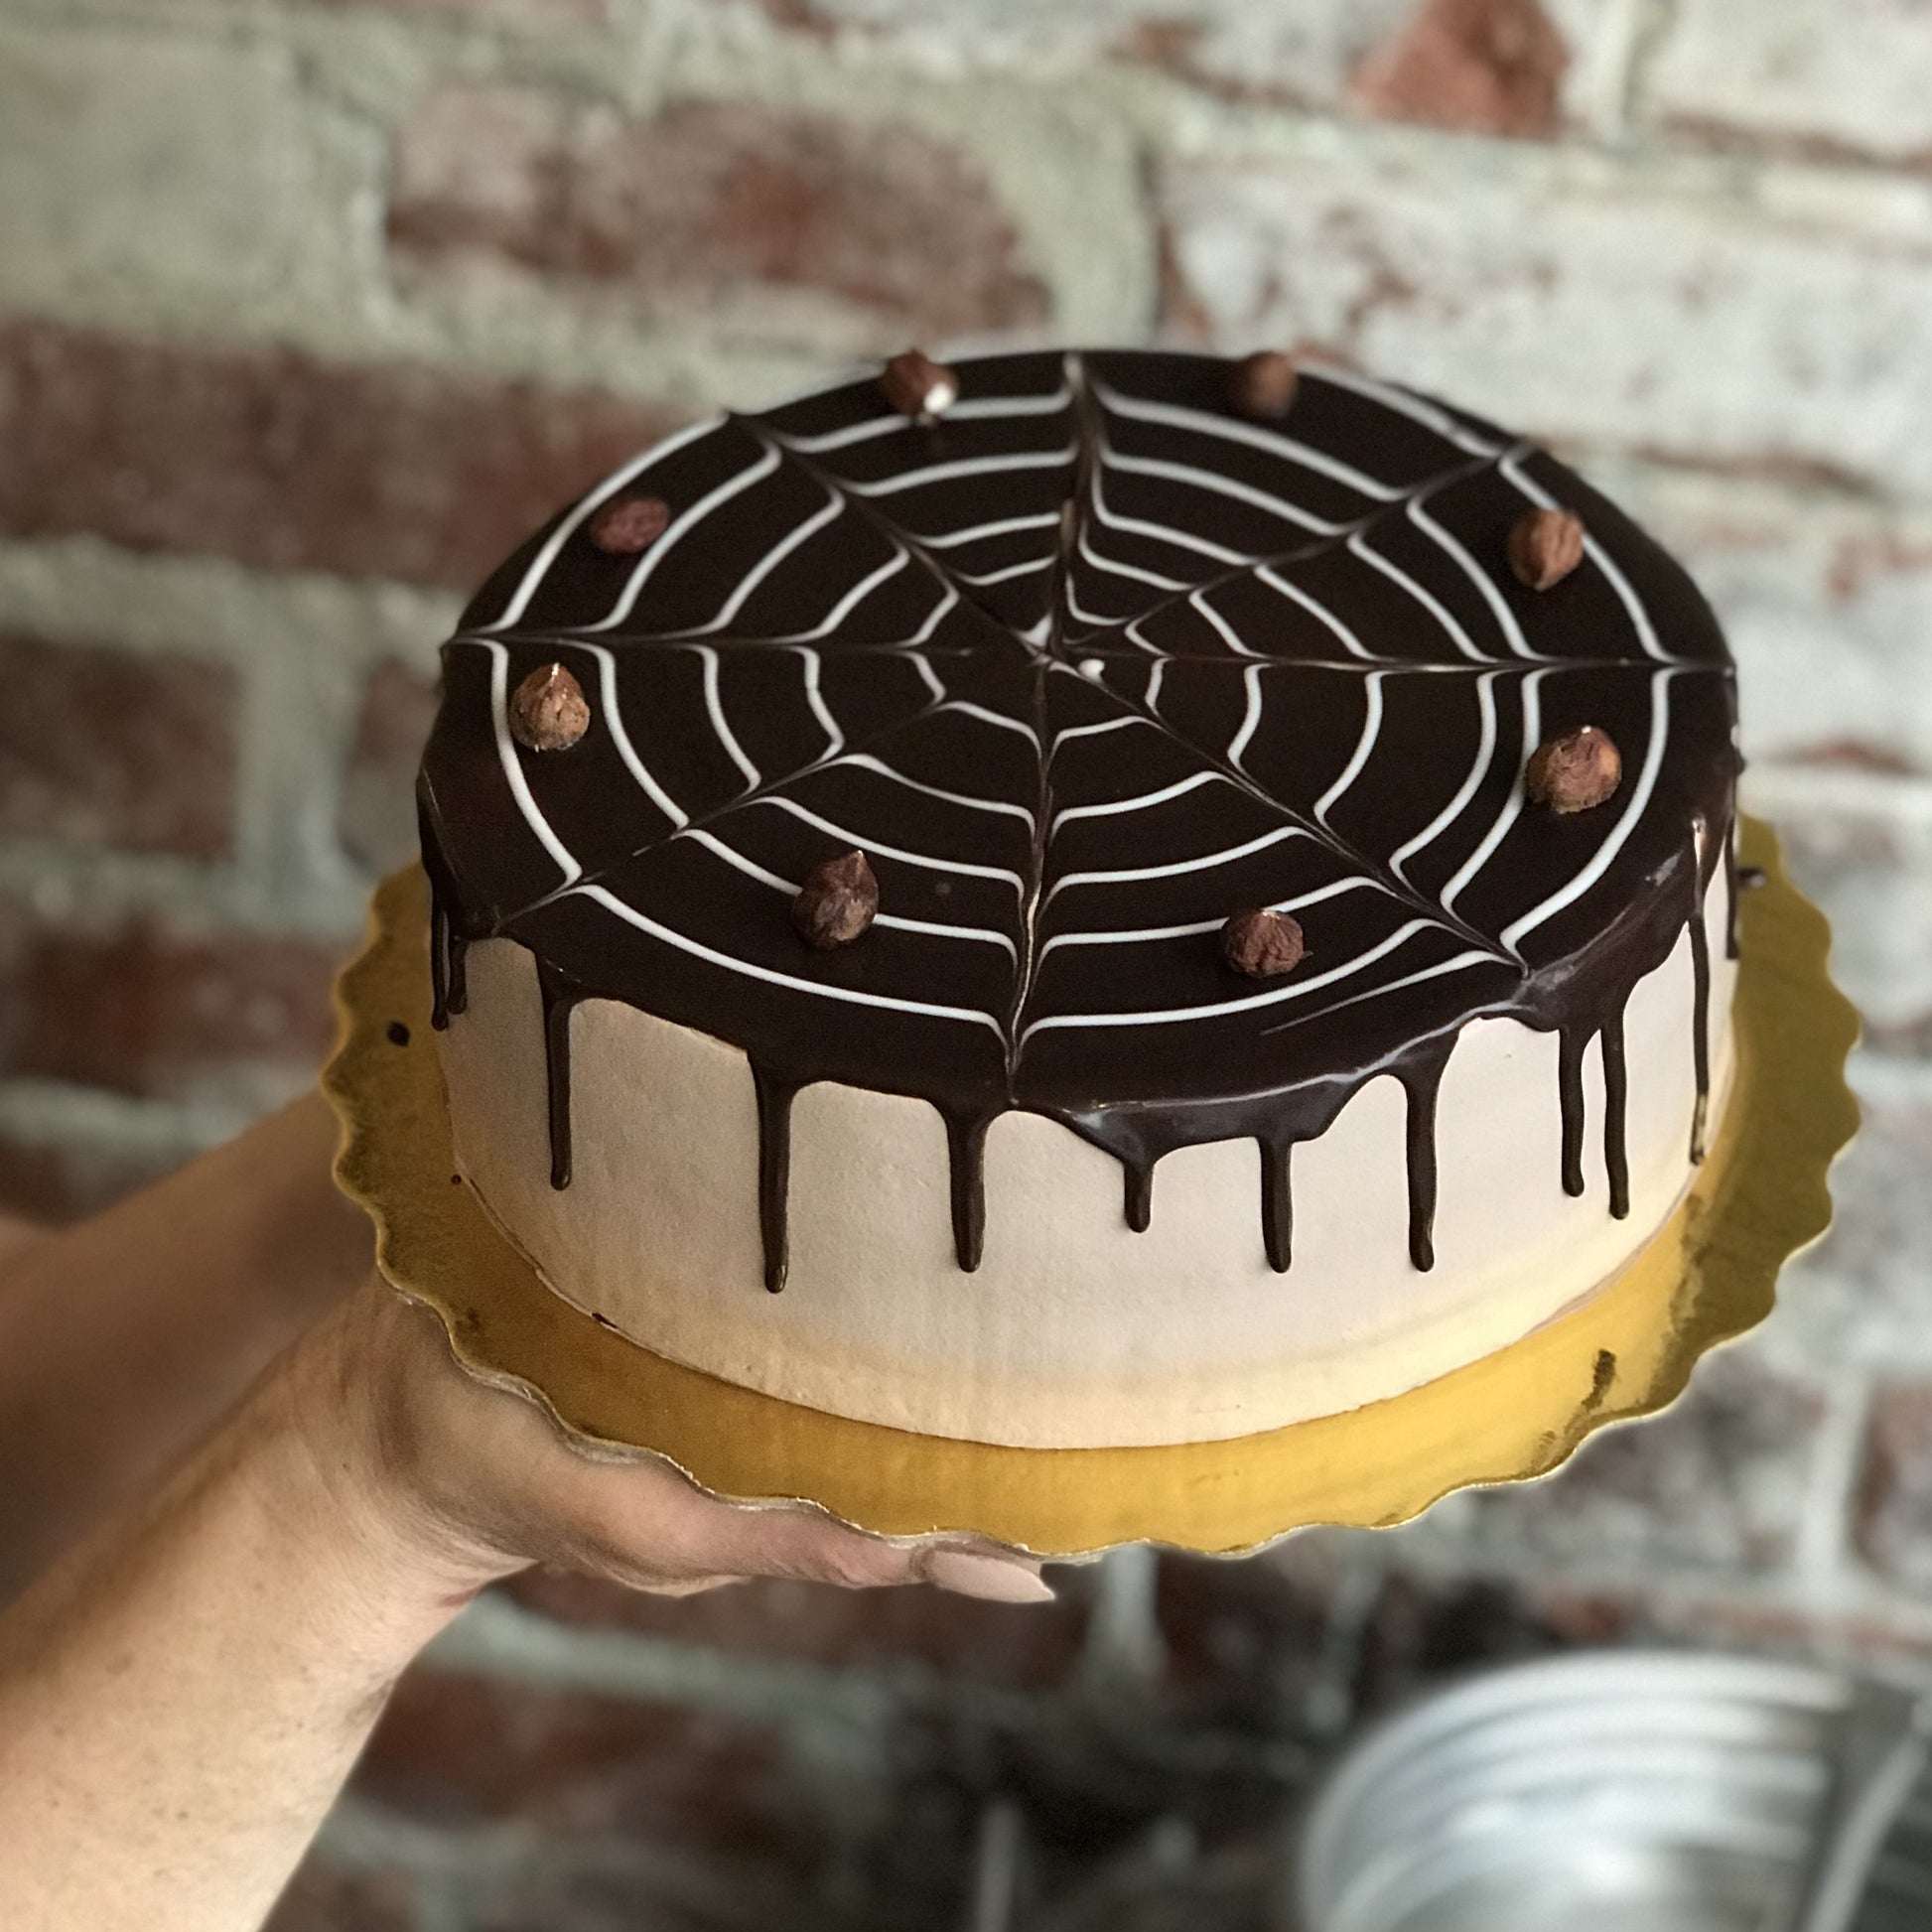 Chocolate bacio cake with chocolate drip